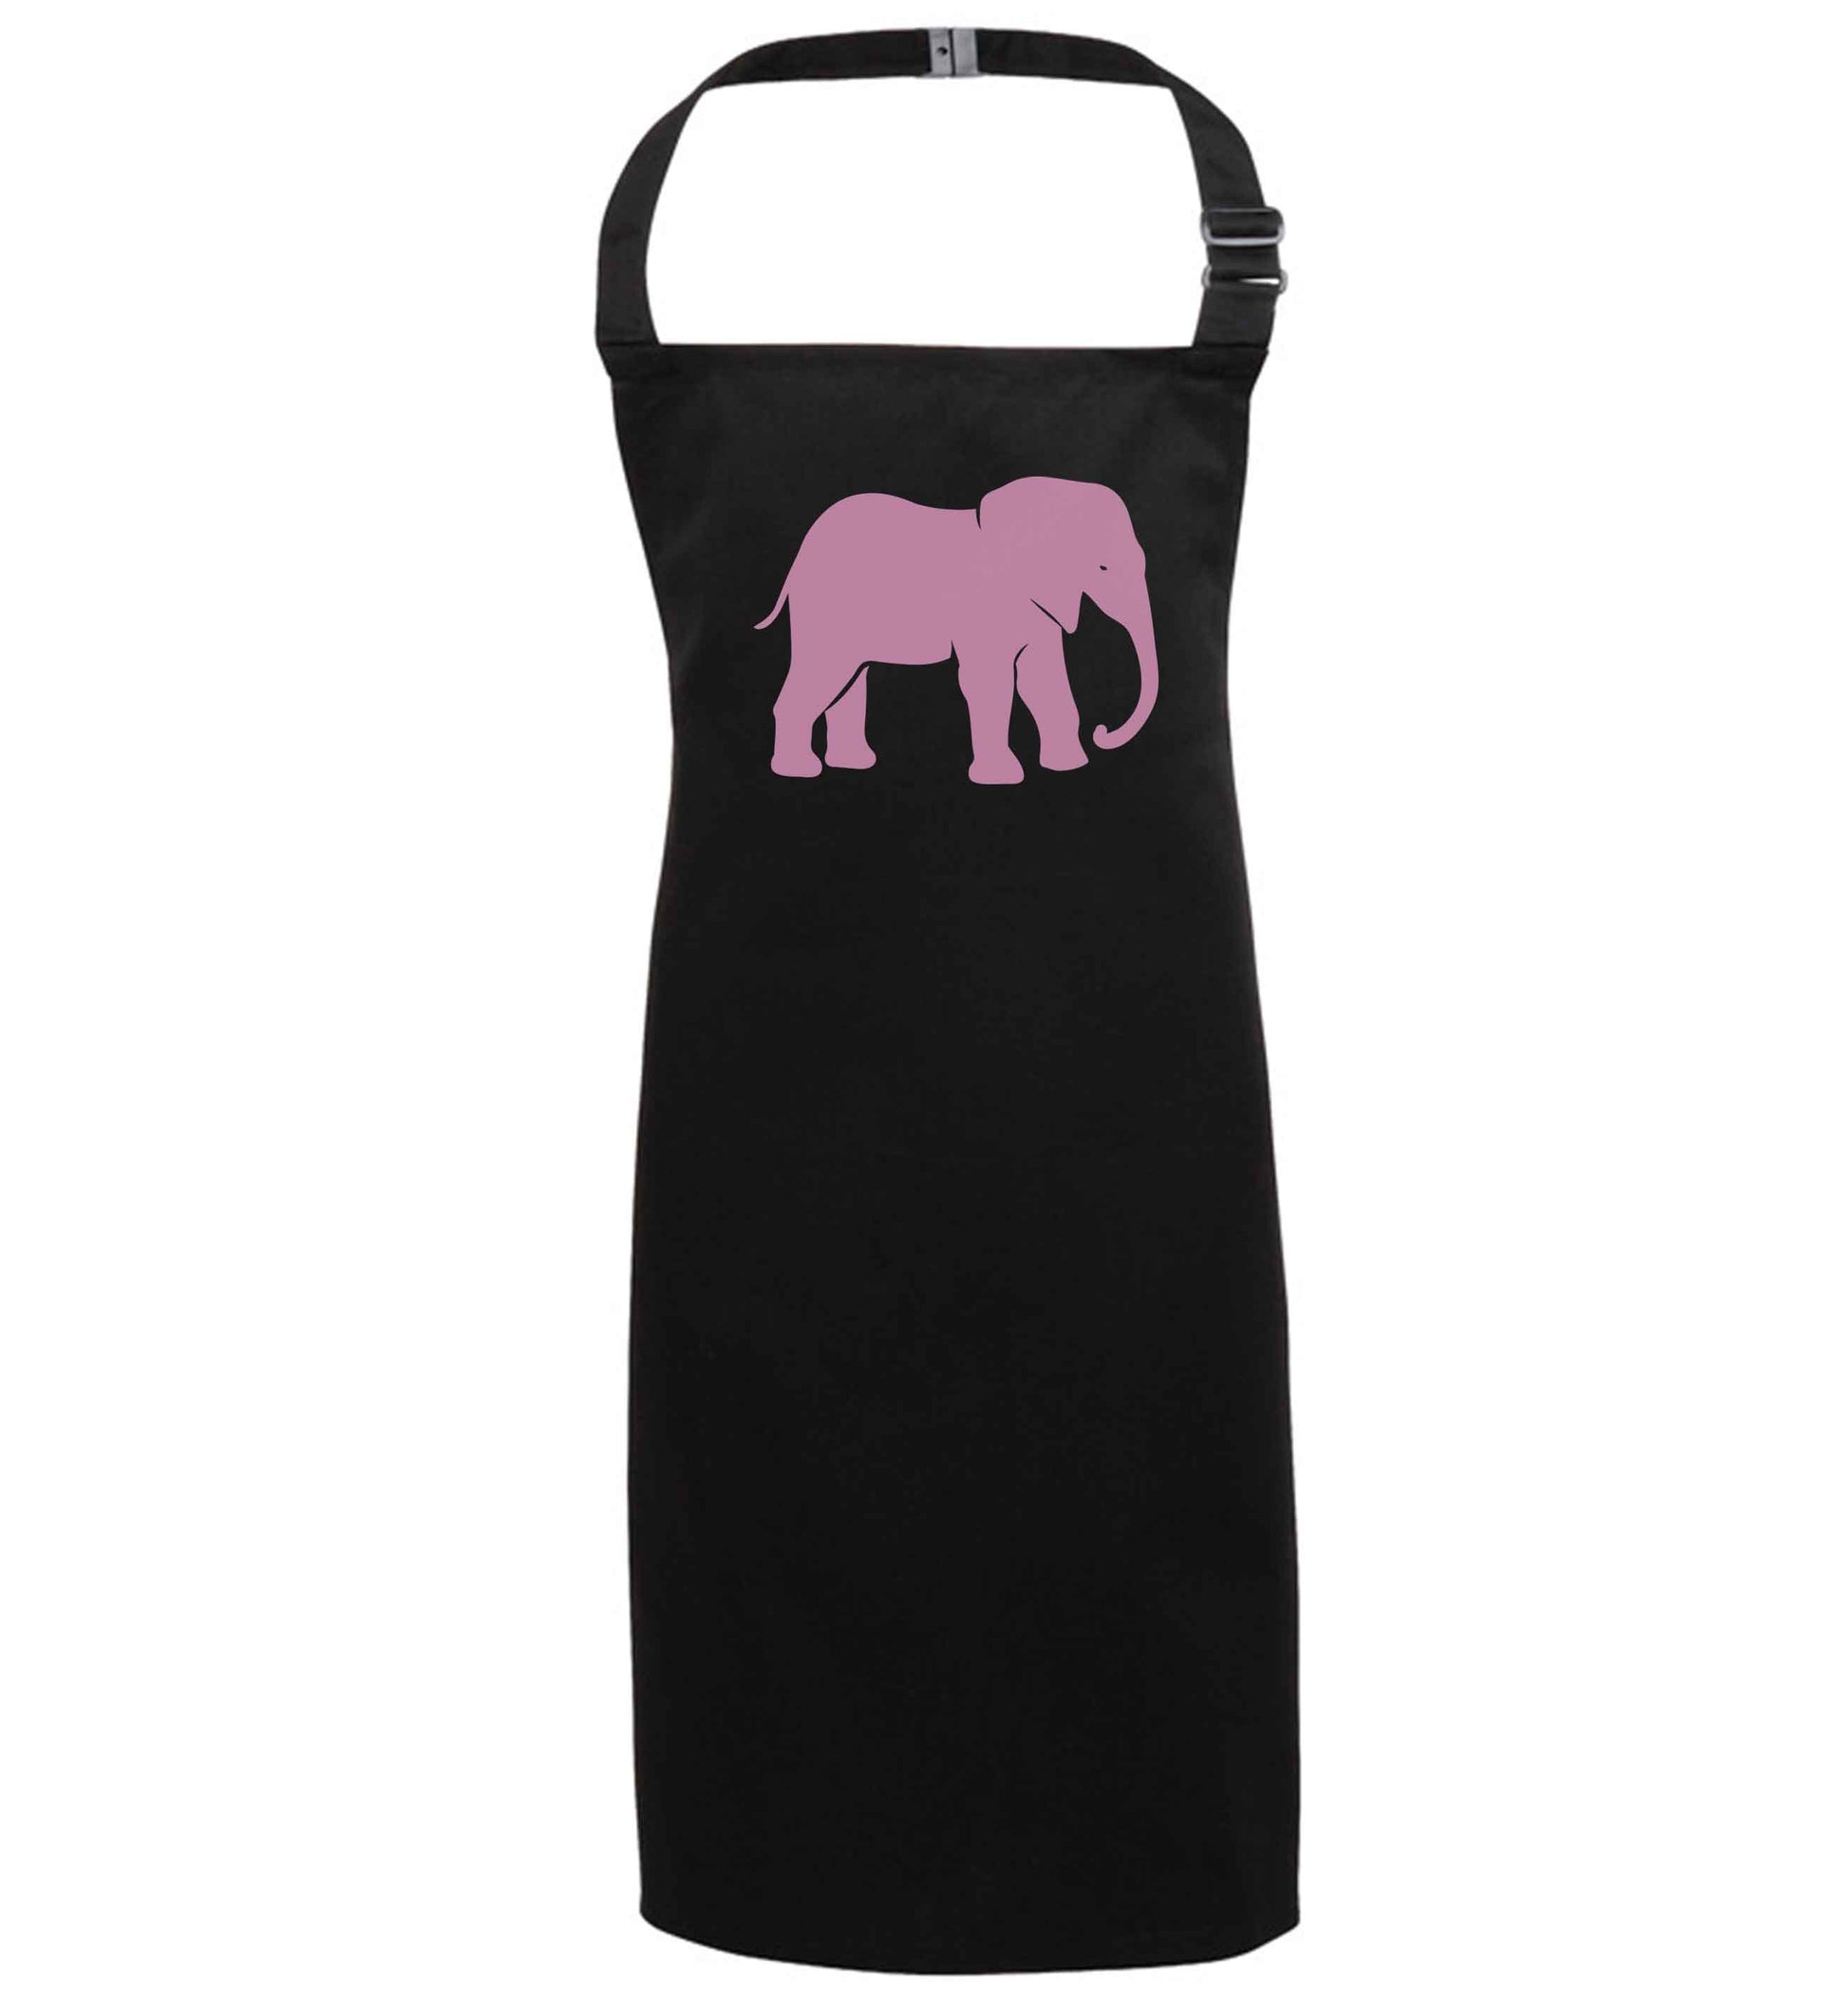 Pink elephant black apron 7-10 years